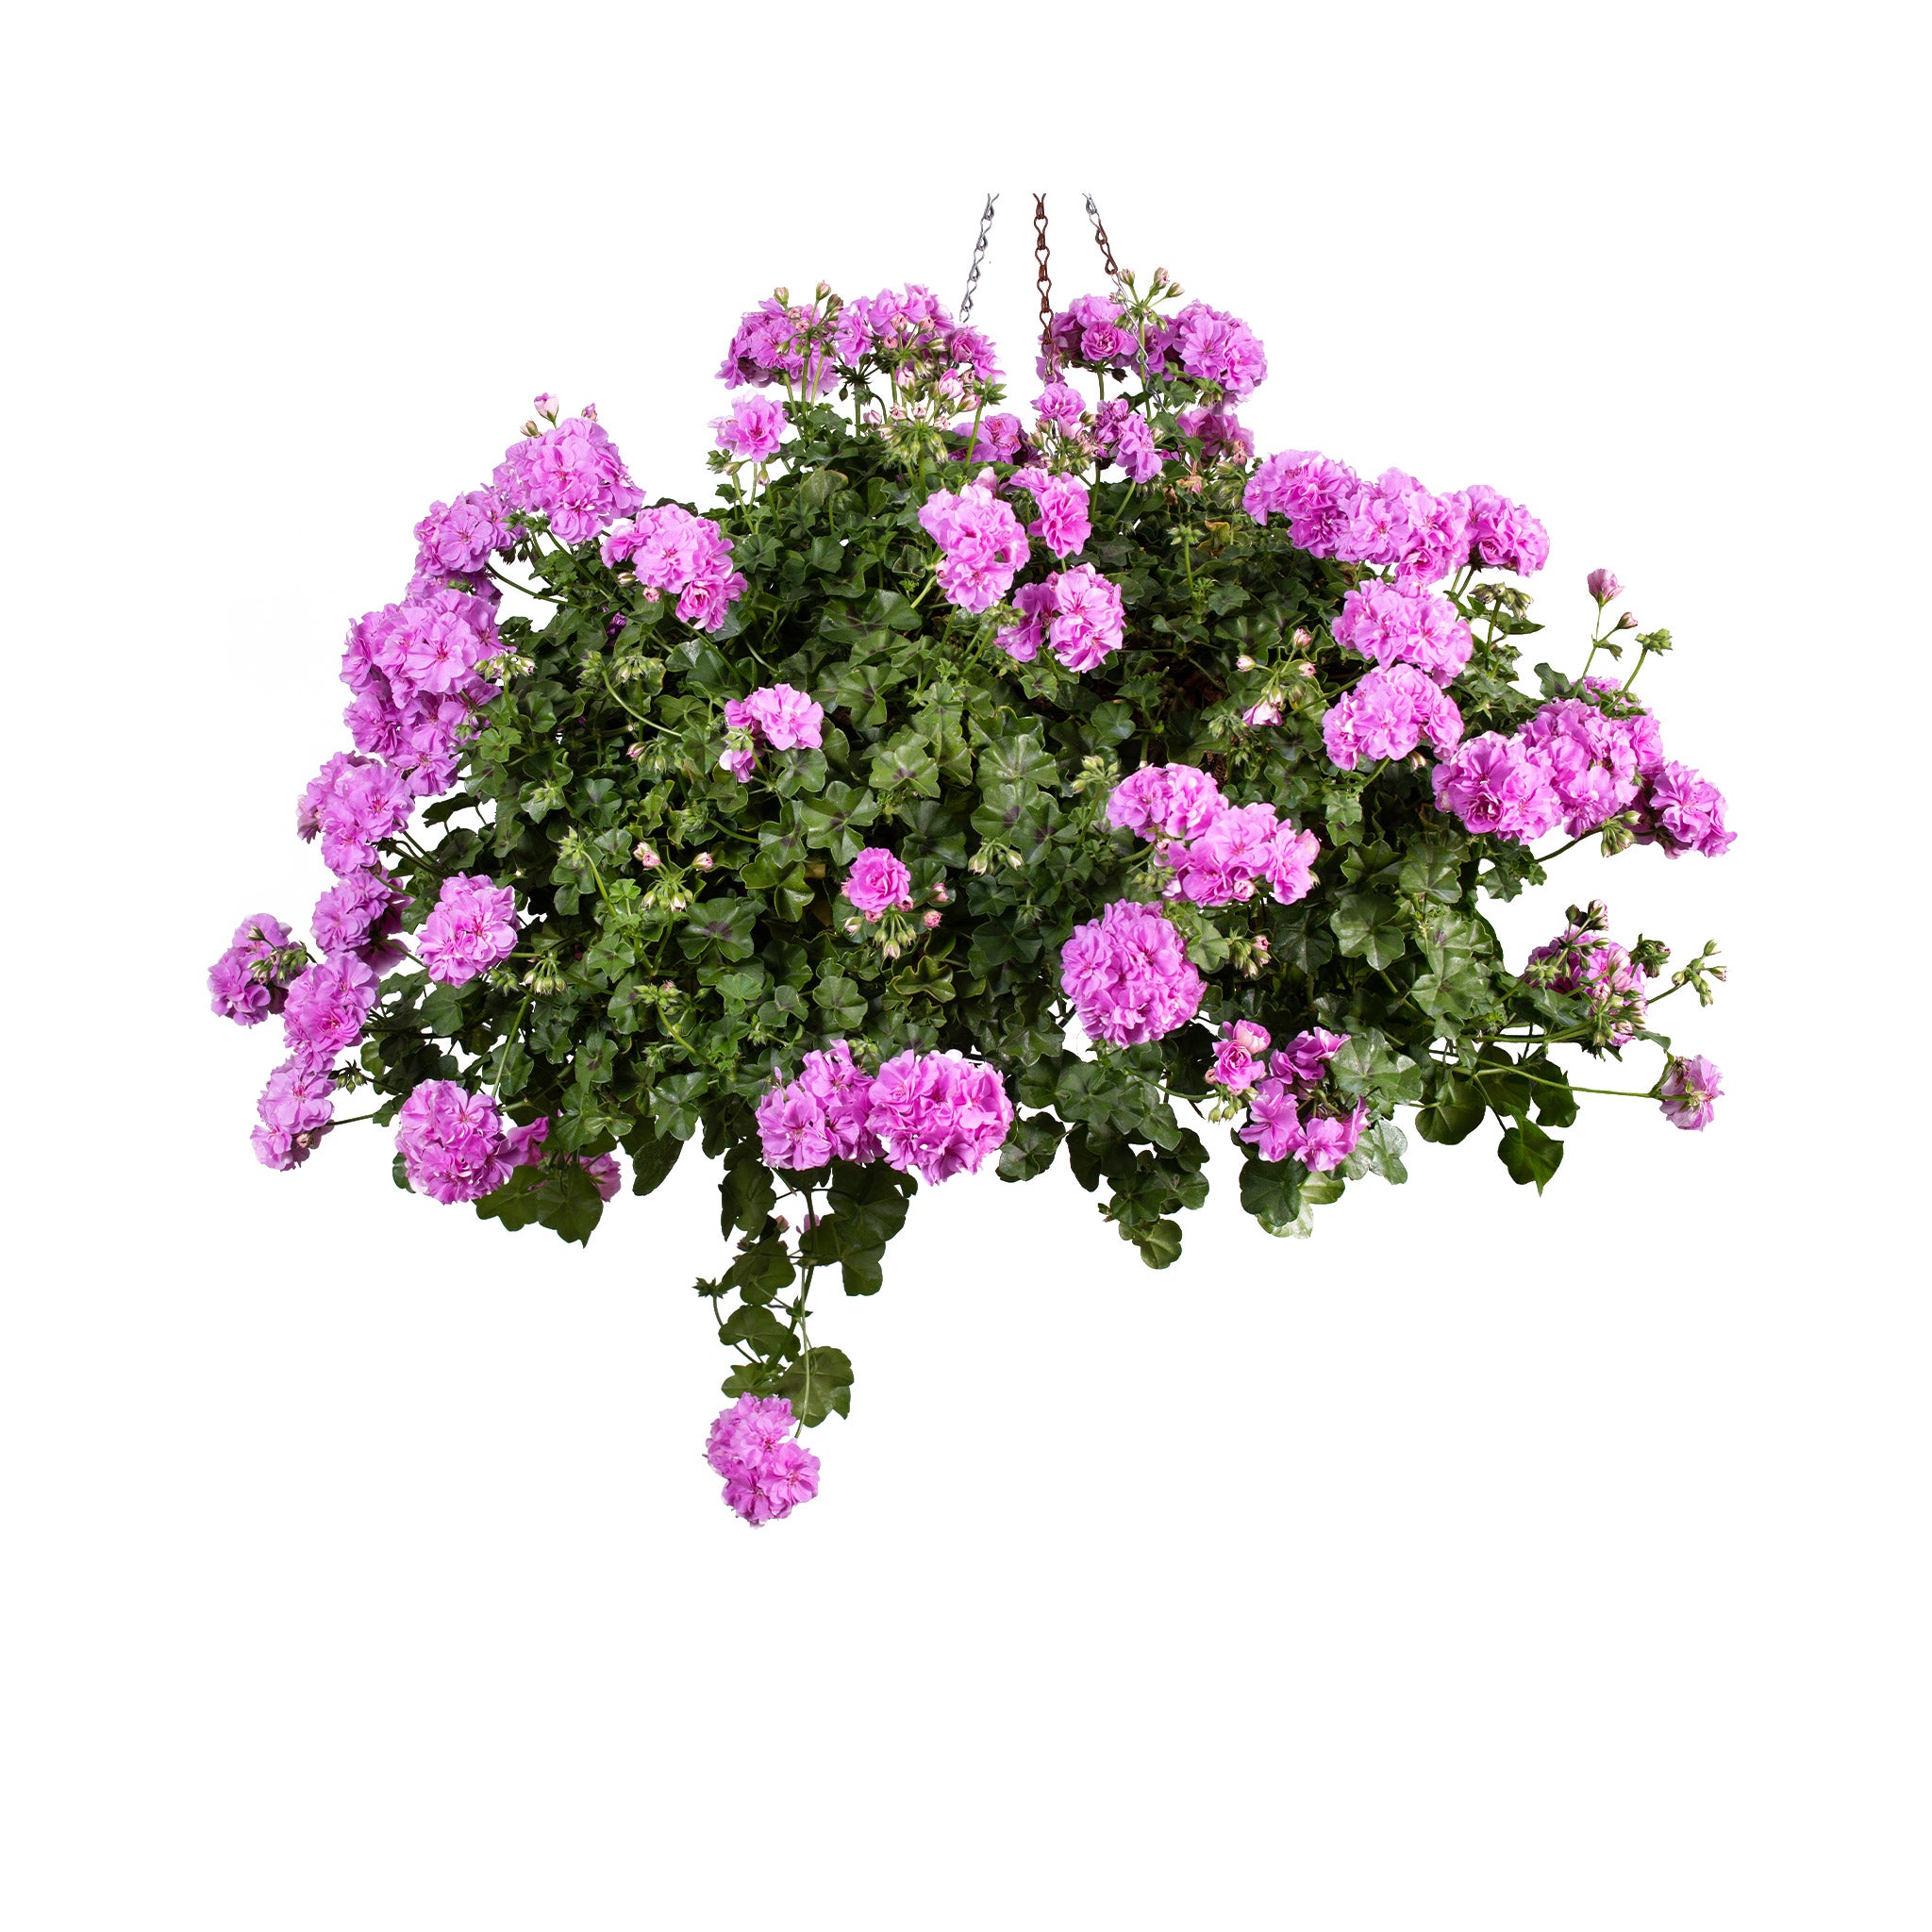 Hanging basket summer collection plug plants, 24 plug plants *Amazing value*